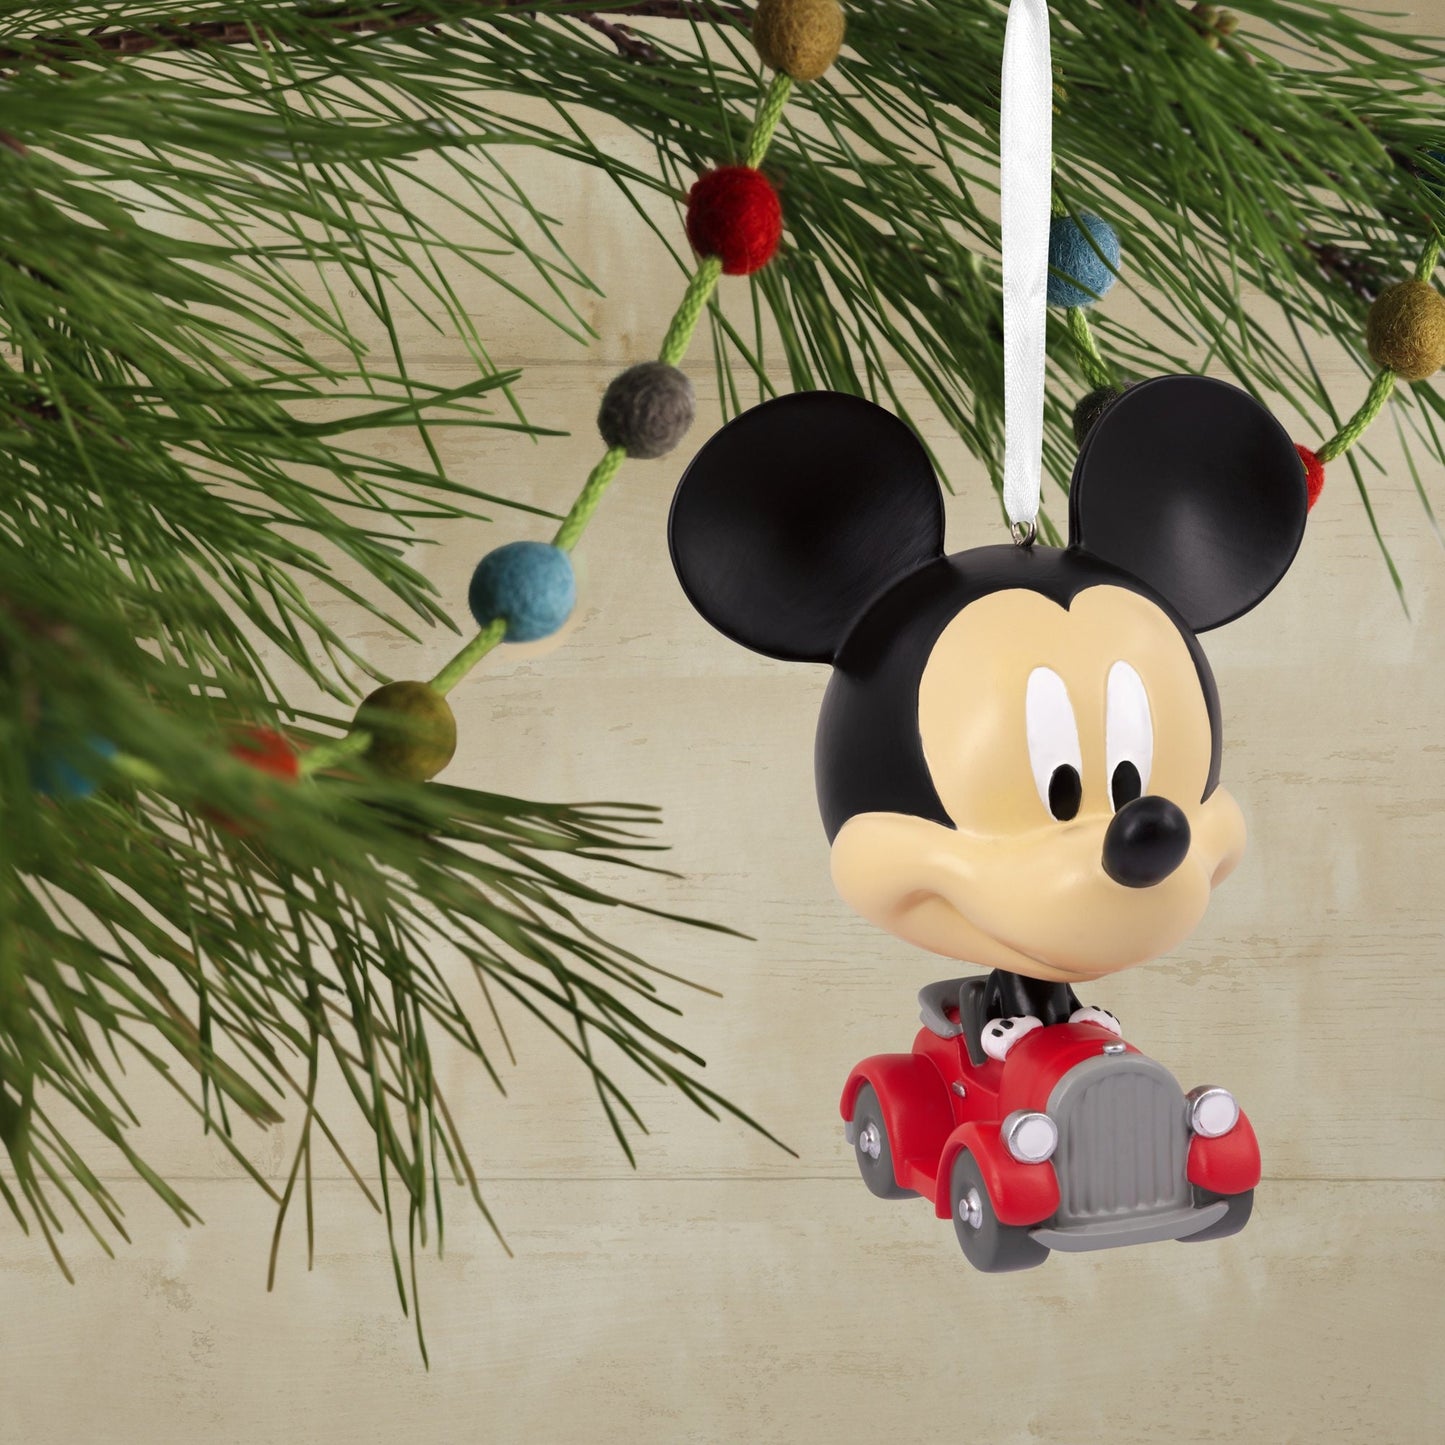 Hallmark Disney Mickey Mouse Bouncing Buddy Christmas Ornament - 2HCM9205